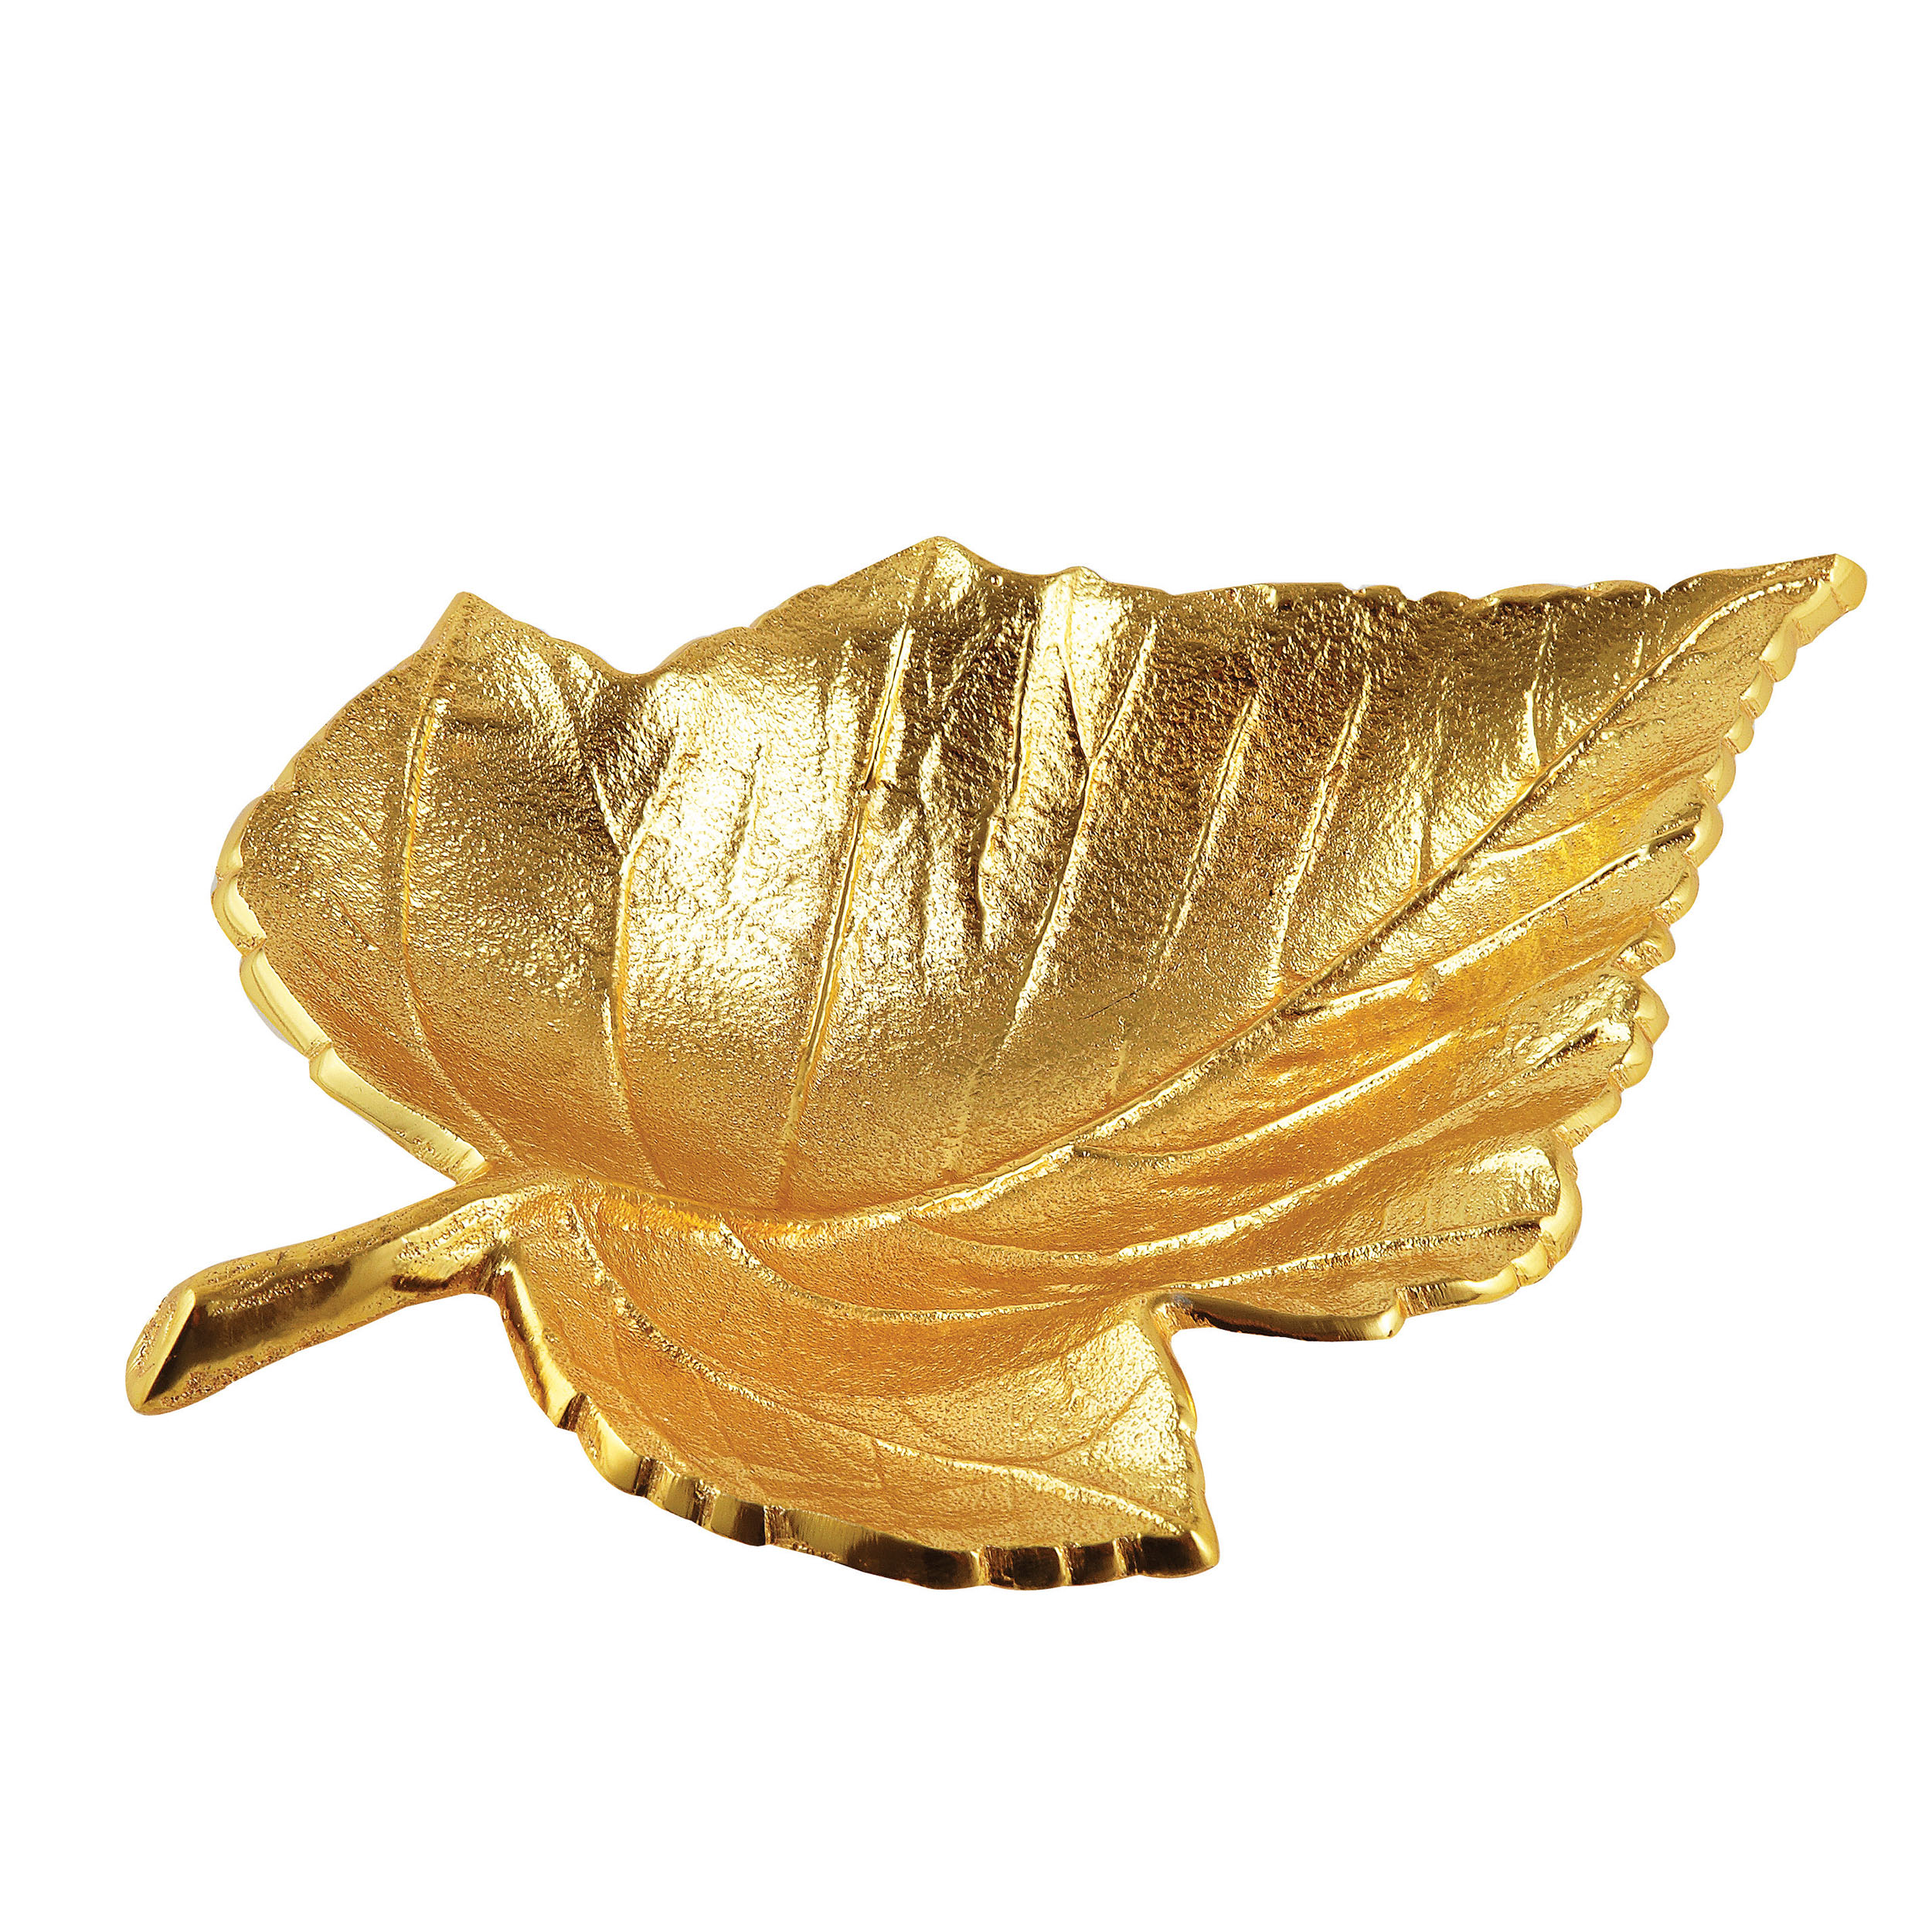 Gold maple leaf, 7" x 5" - Item # 6124